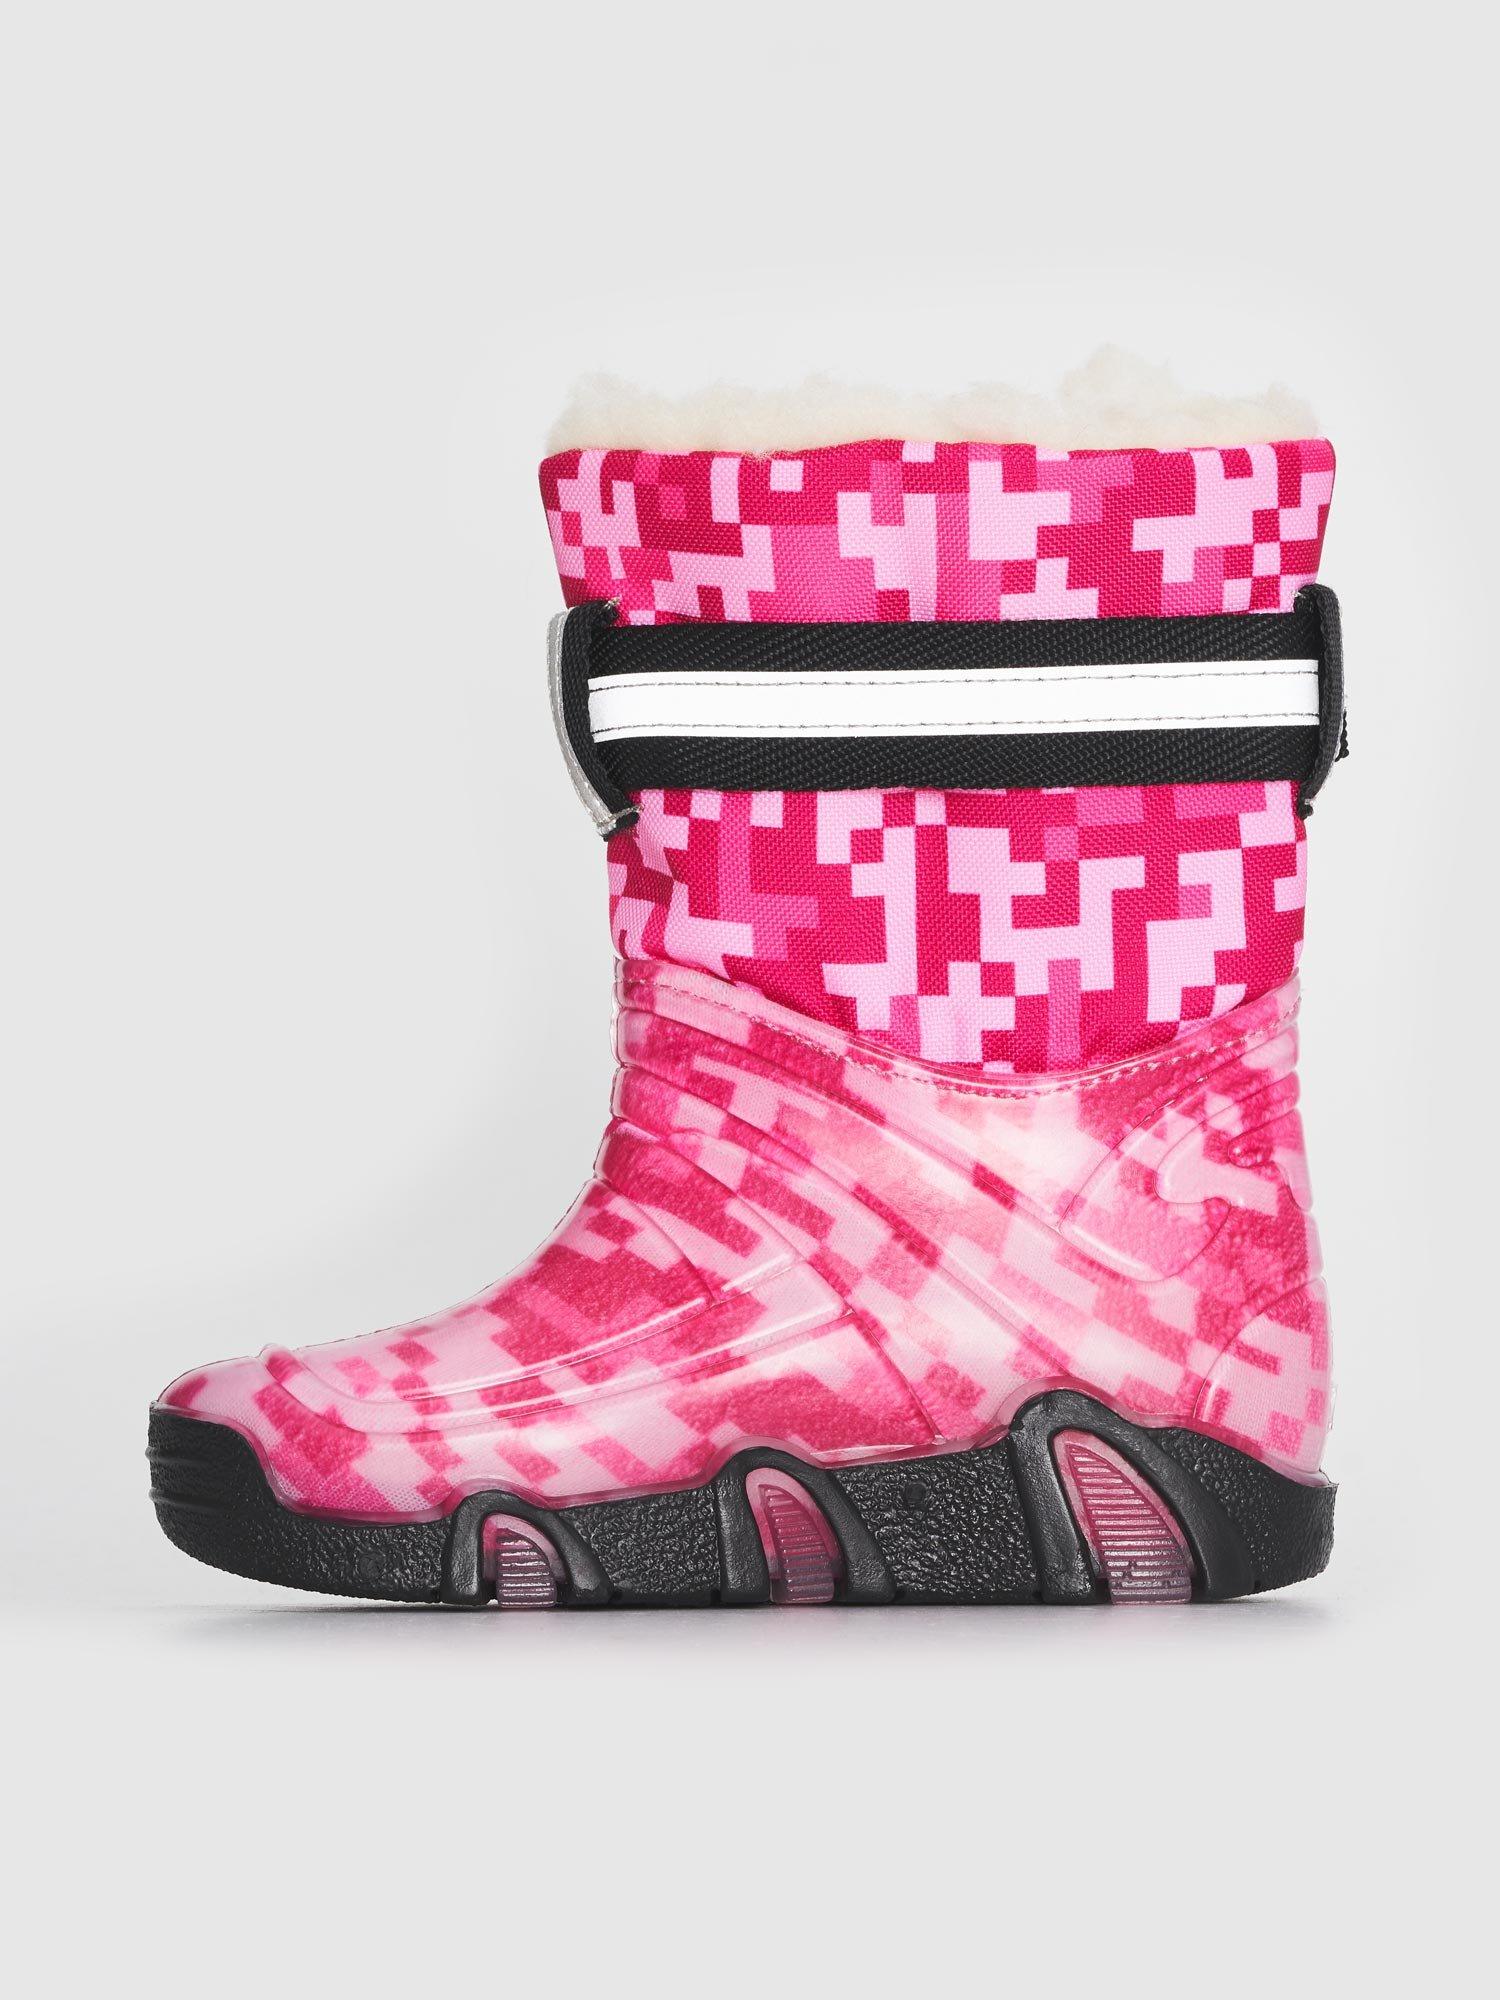 Selected image for BRILLE Zimske čizme za devojčice Frost II roze